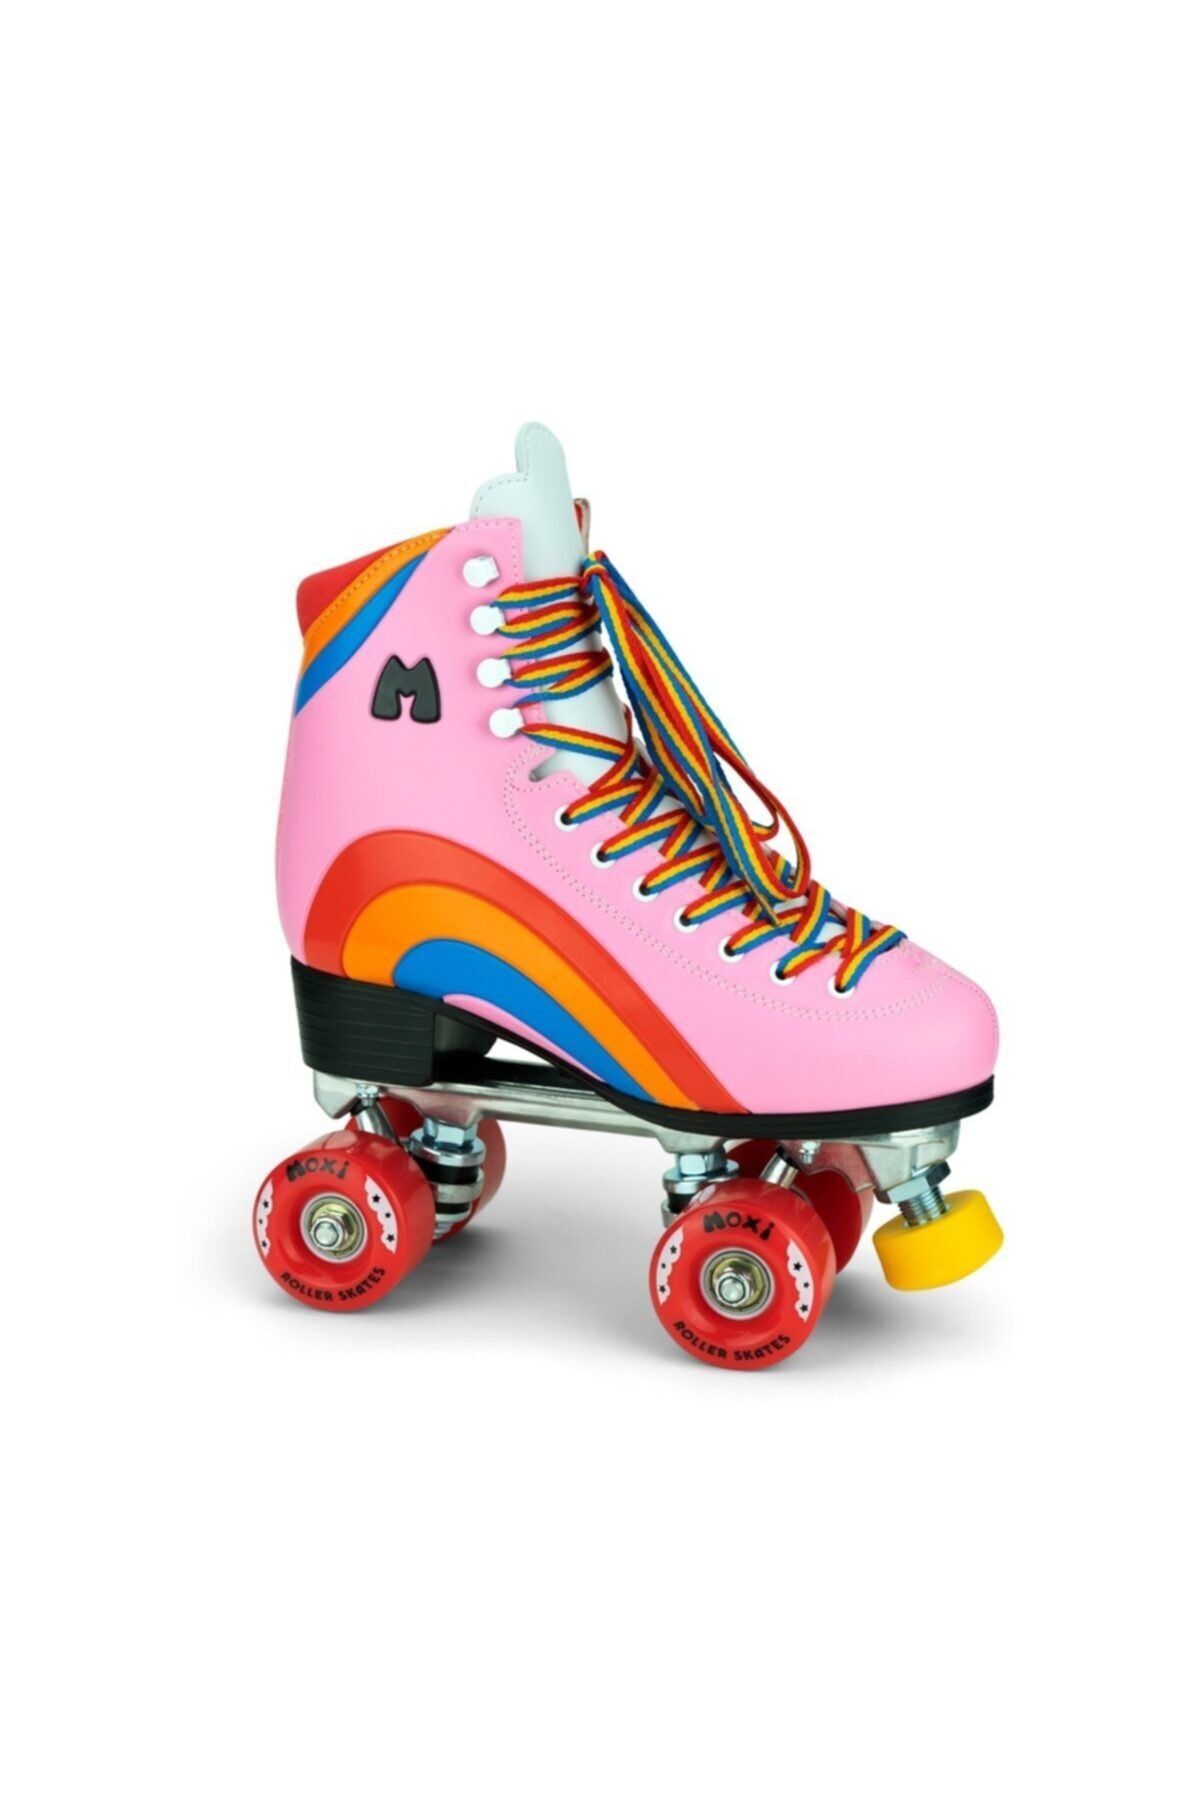 Moxi Skates Rainbow Rider Pink Quad Paten